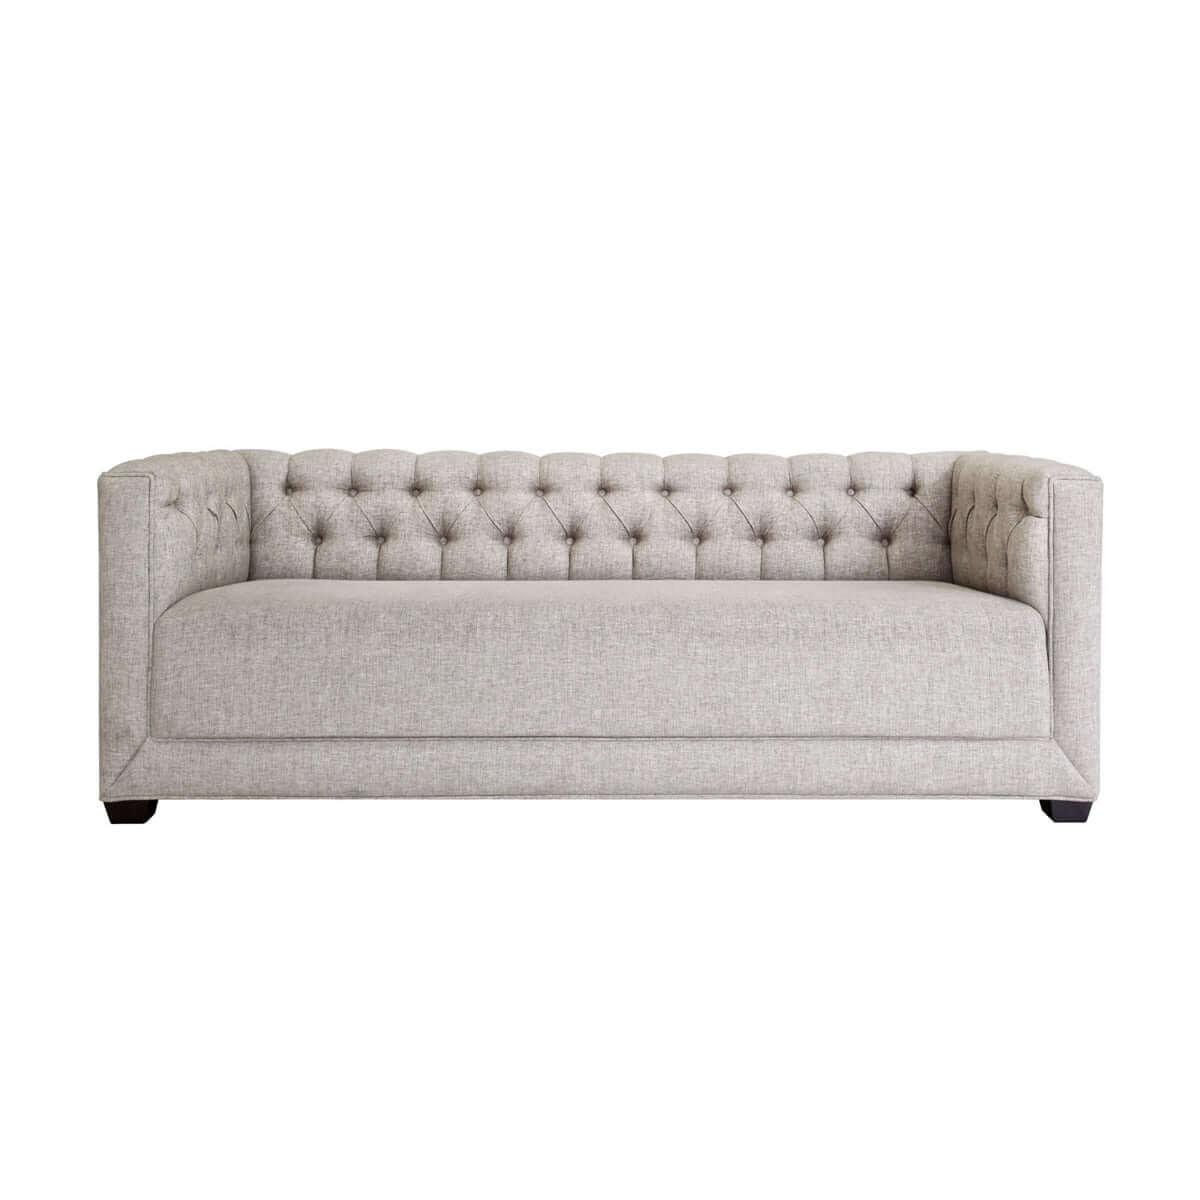 Hampton 3 seat tufted, classic and stylish sofa